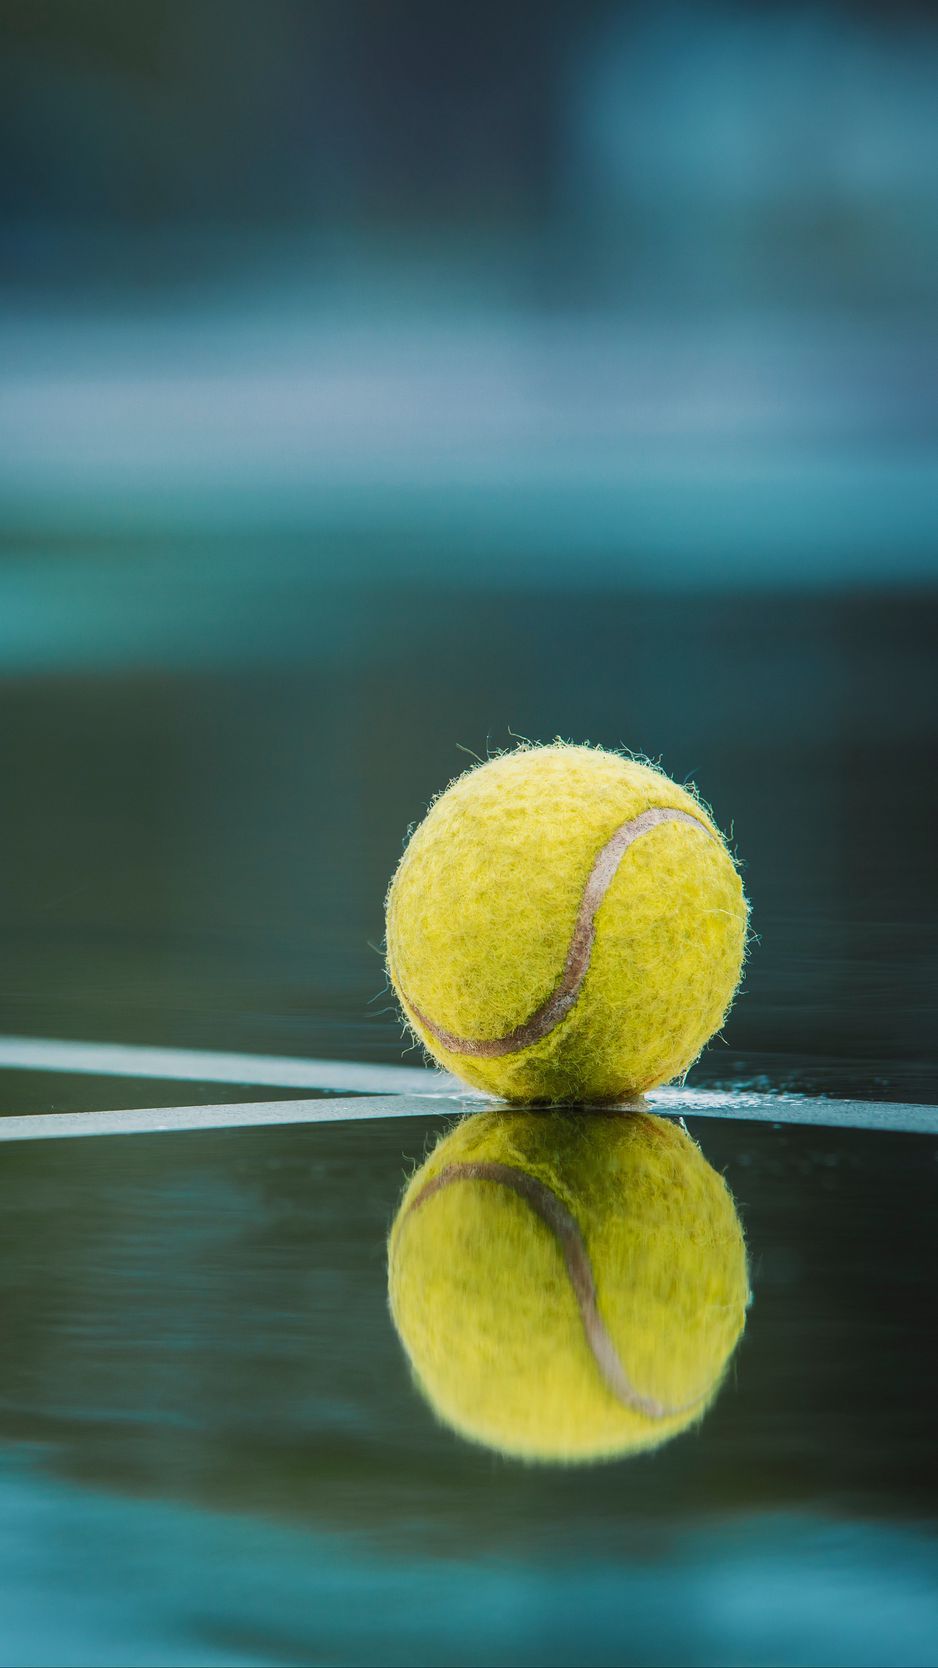 Download wallpaper 938x1668 ball, tennis, court, reflection, lines